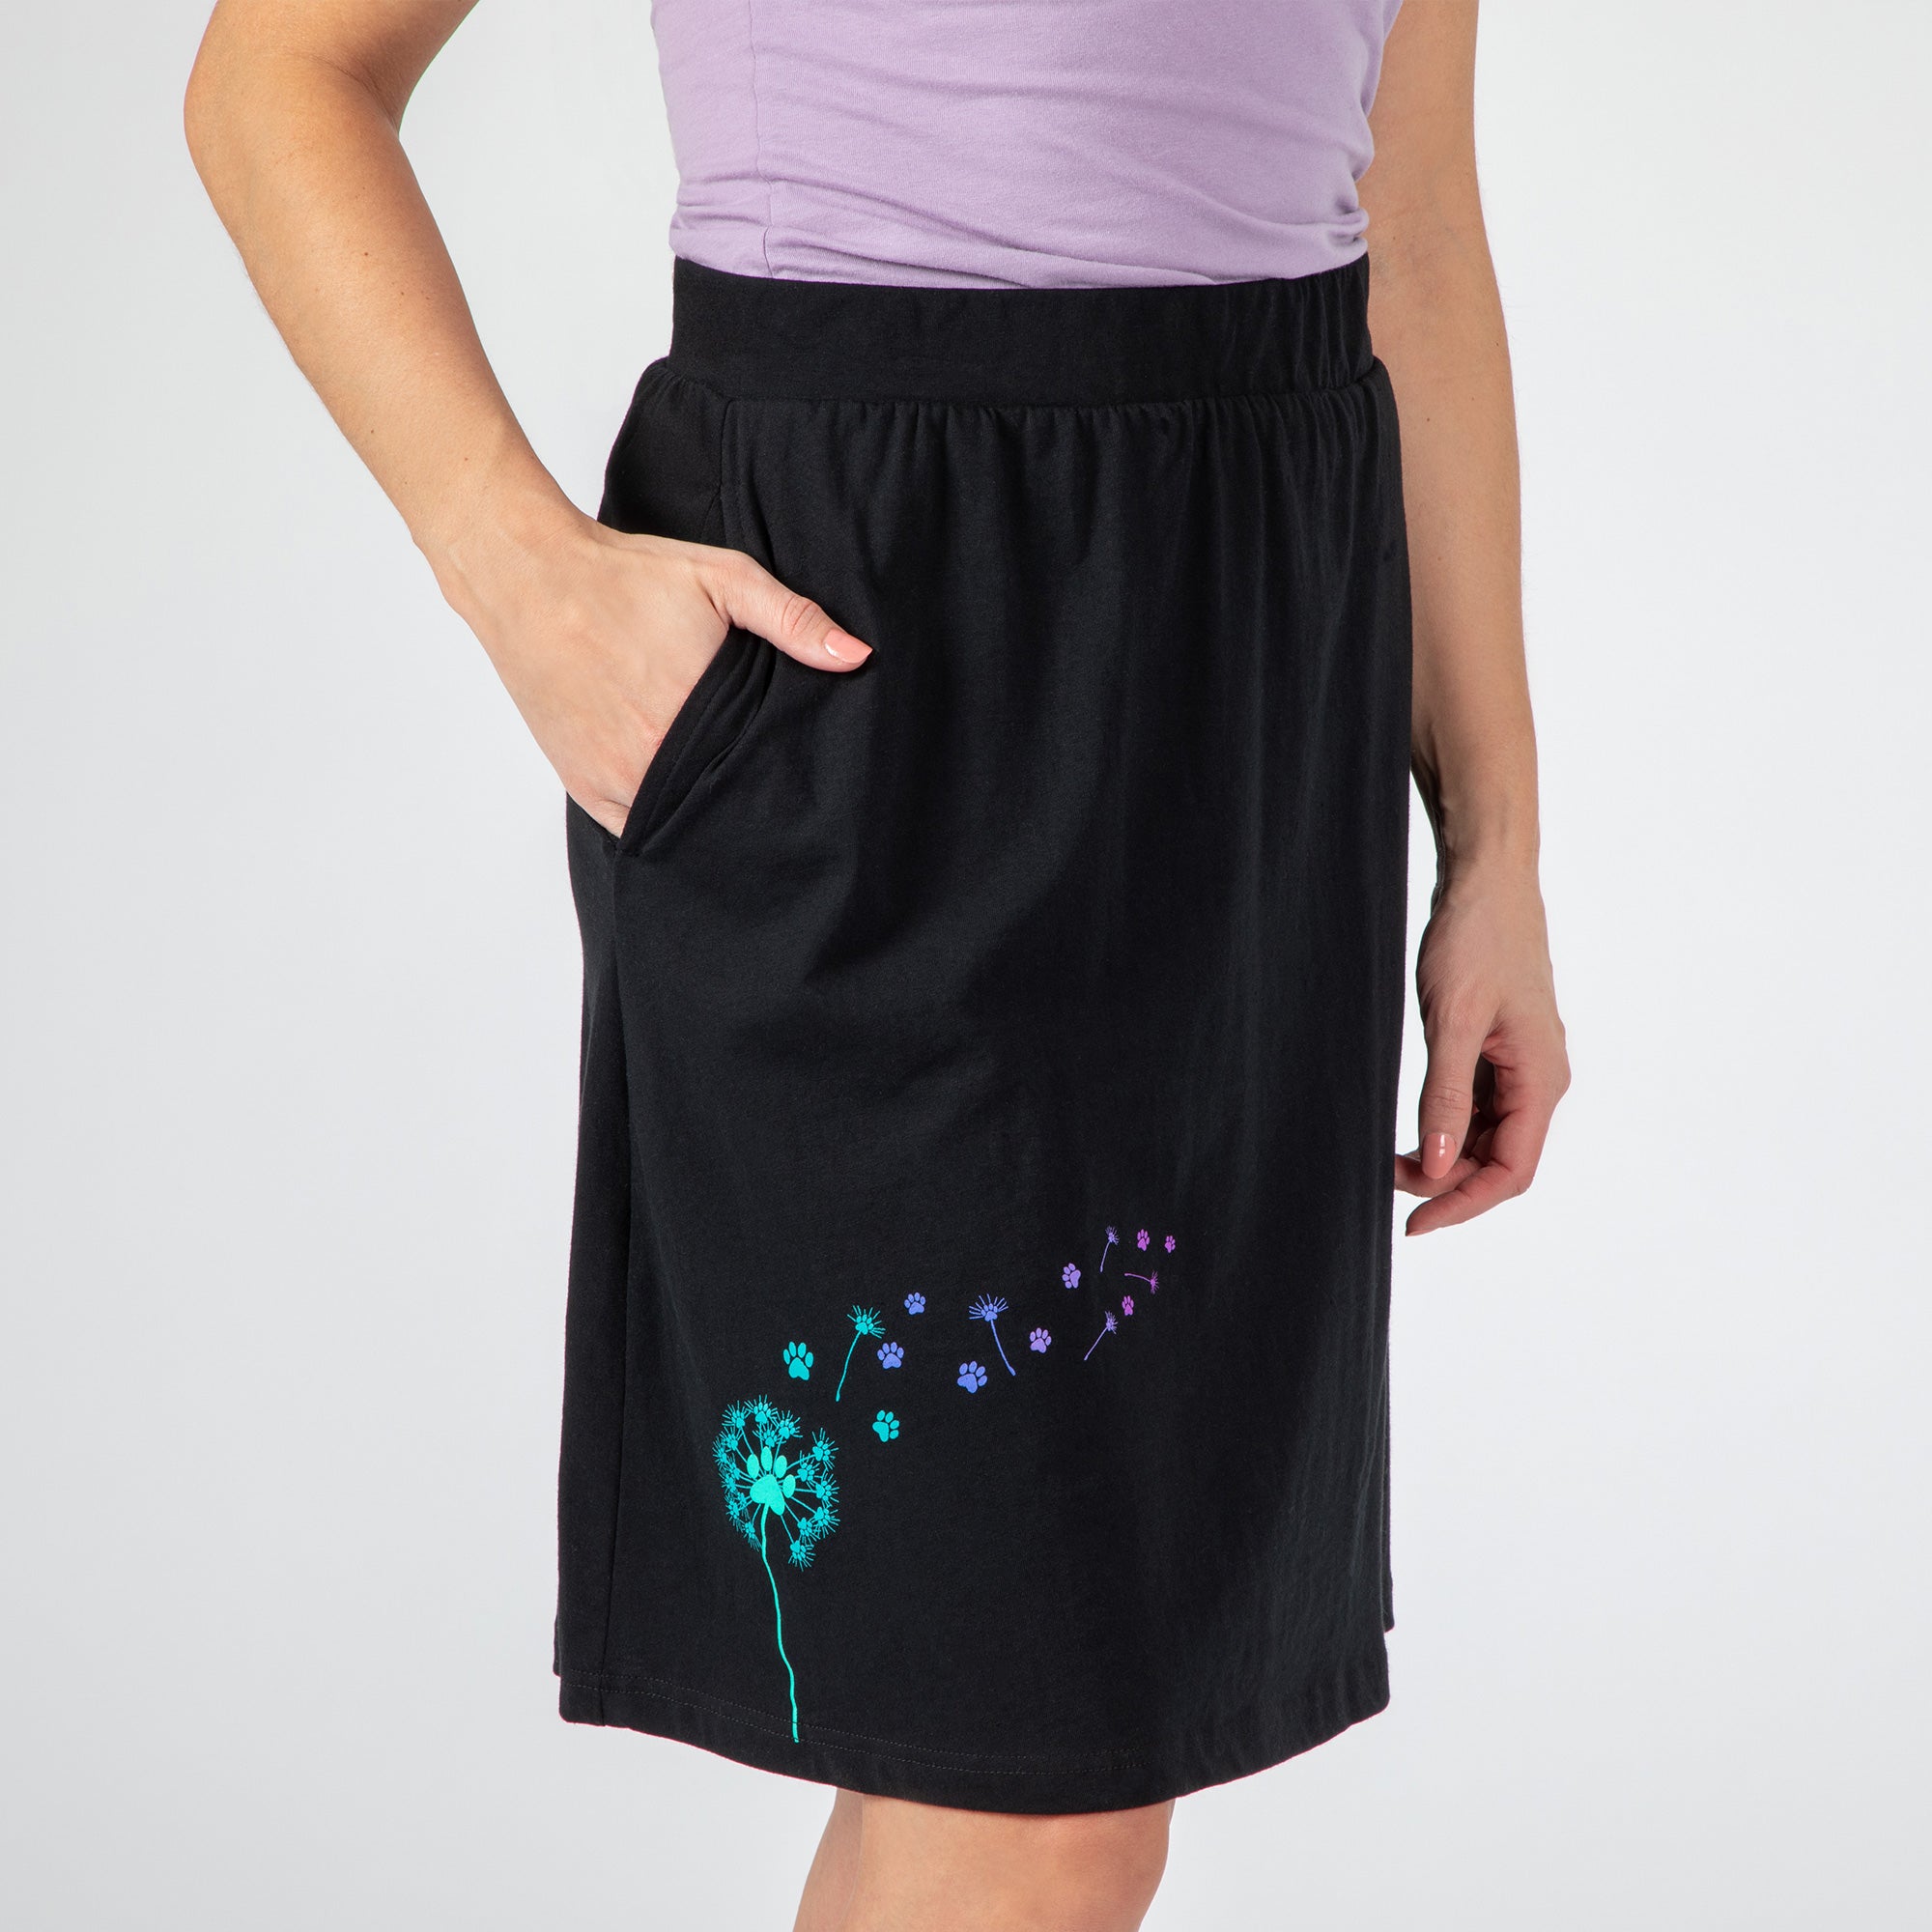 Dandelion Paw Print A-Line Skirt - L